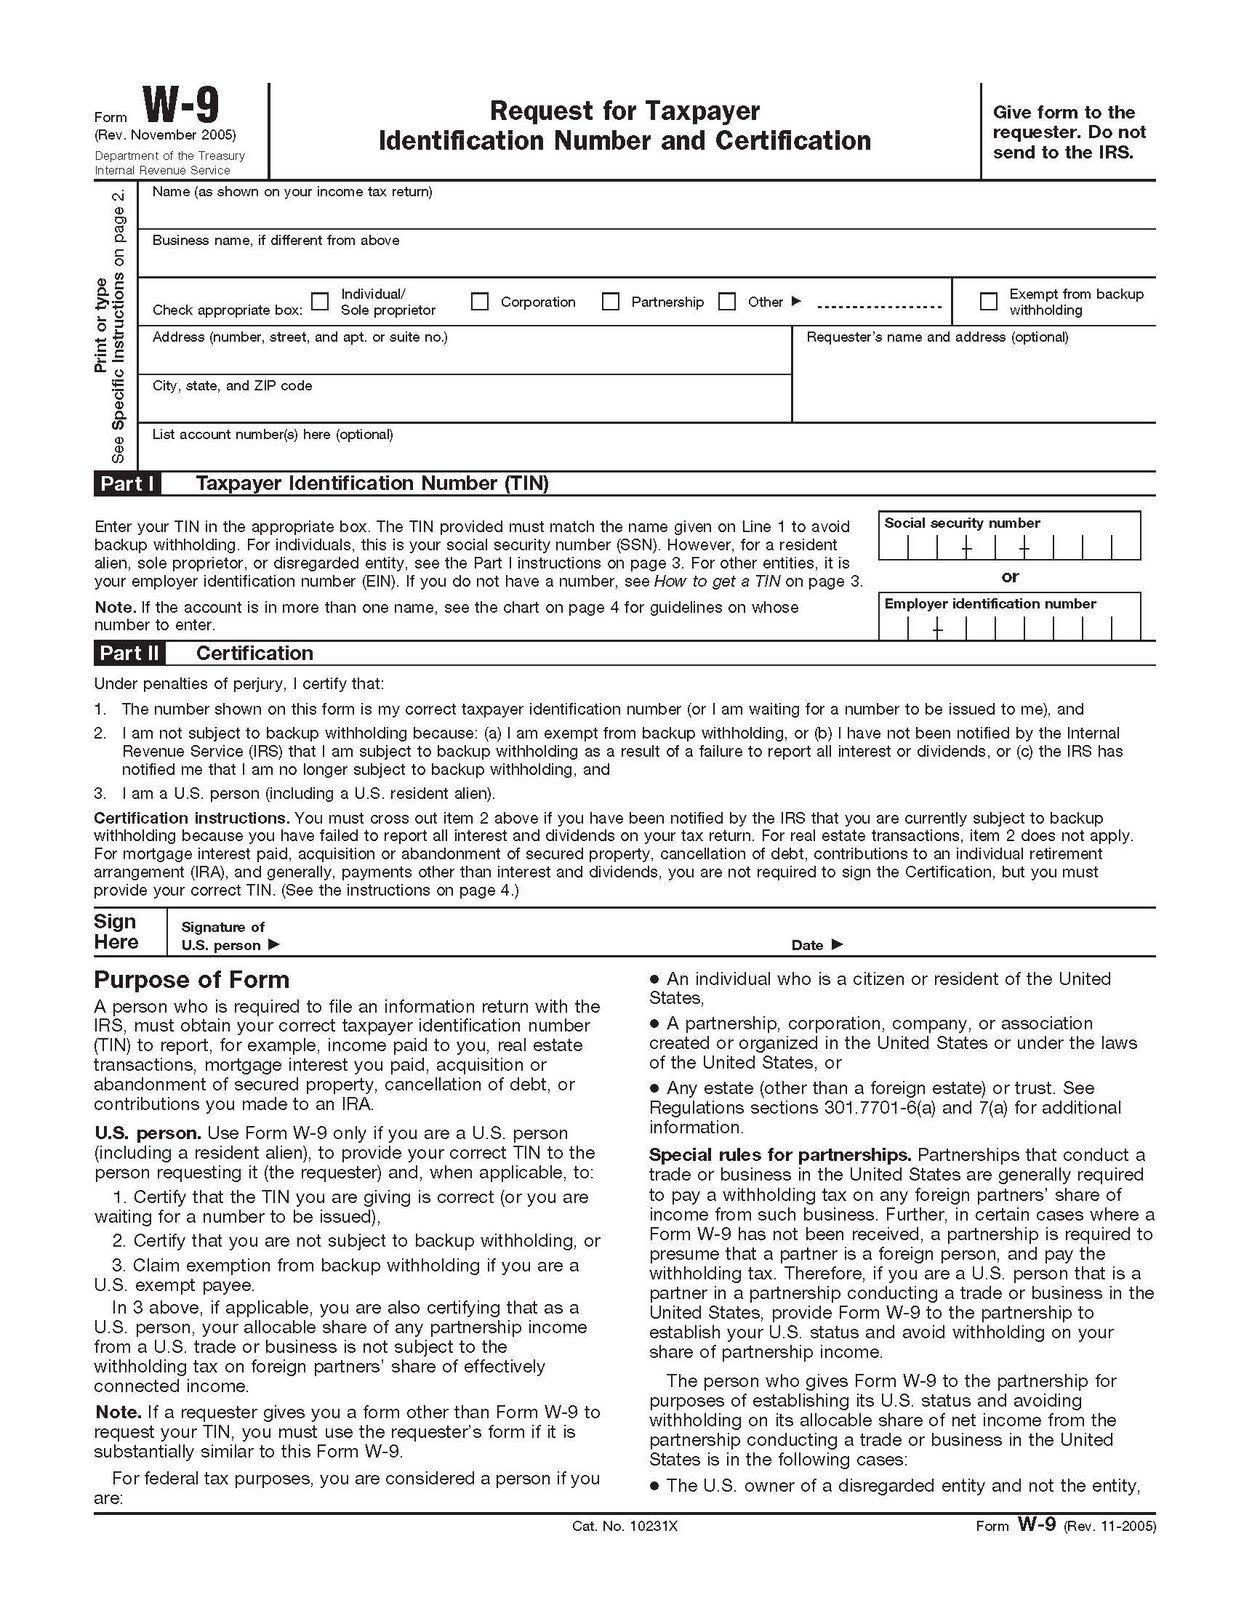 W9 Forms 2021 Printable Free | Calendar Printable Free-Form W-9 2021 Printable